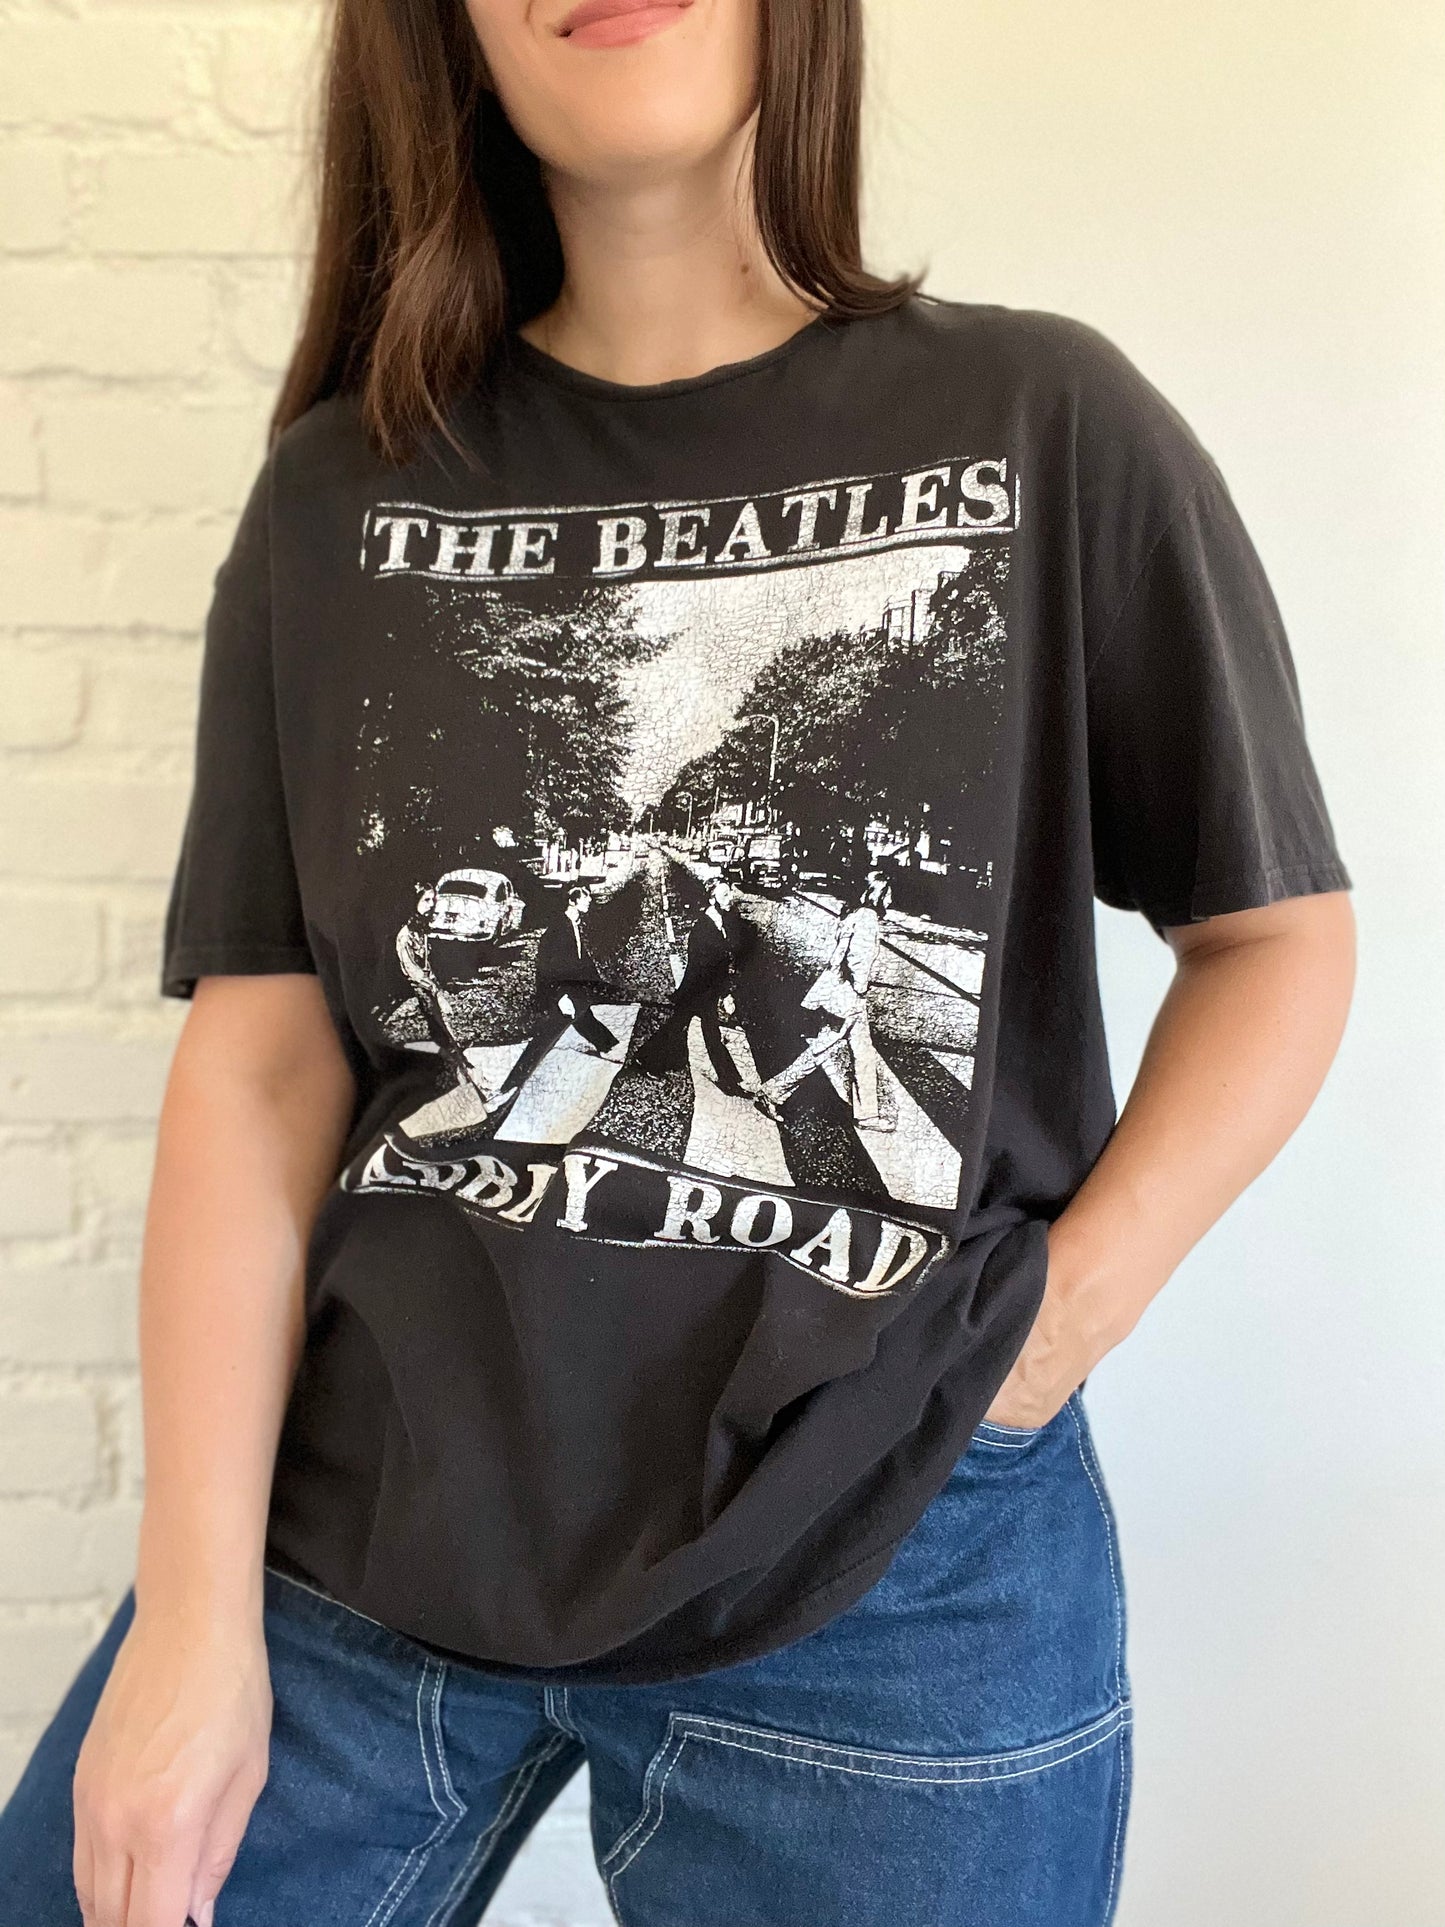 The Beatles Abbey Road T-shirt - Size XL